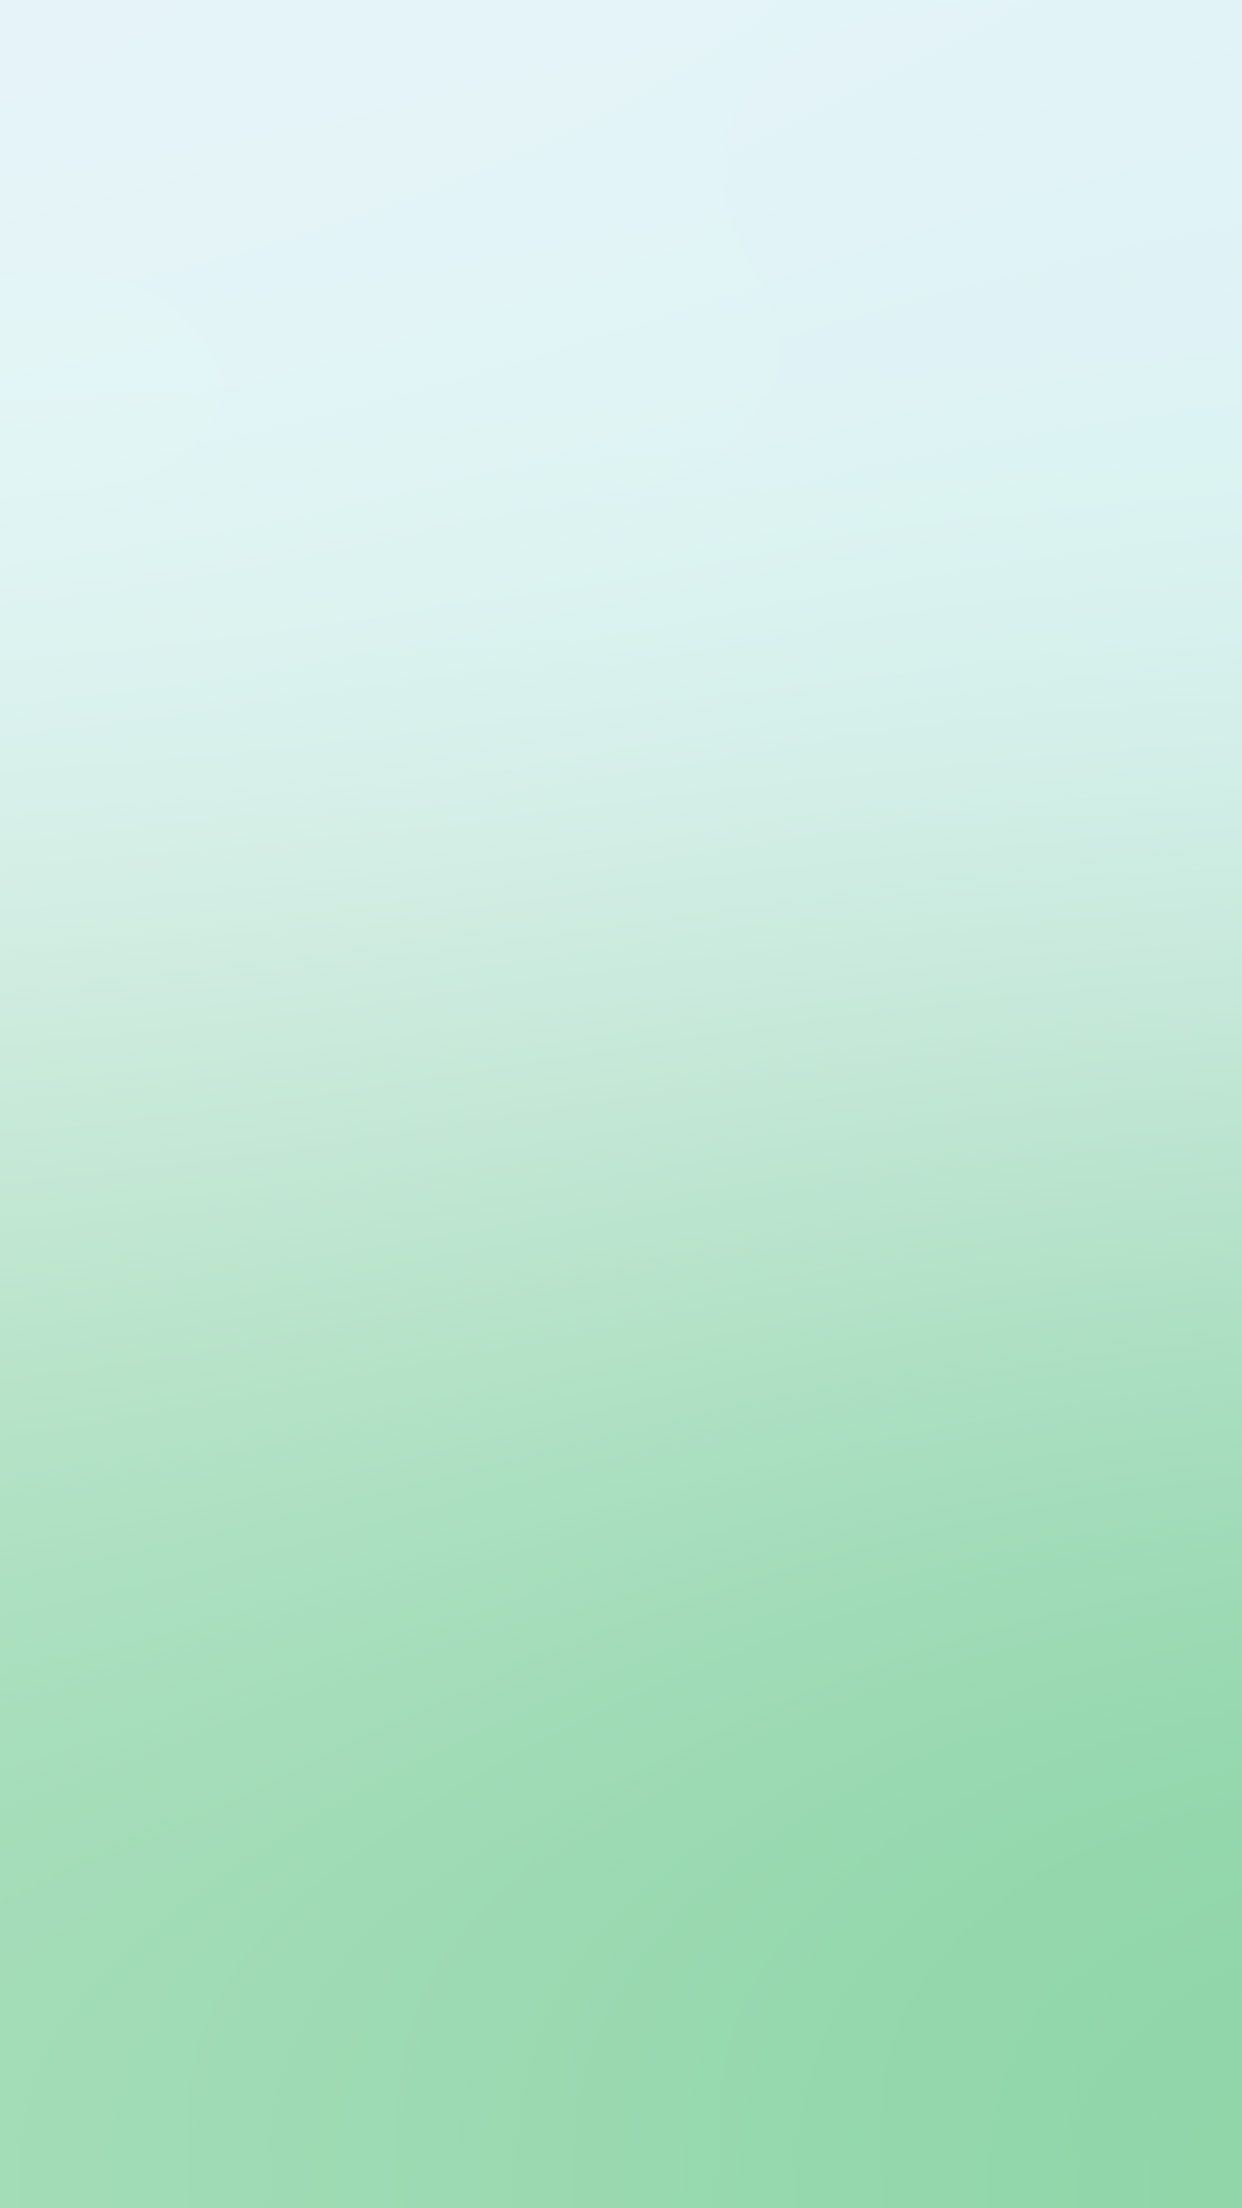 iPhone X wallpaper. green soft pastel blur gradation